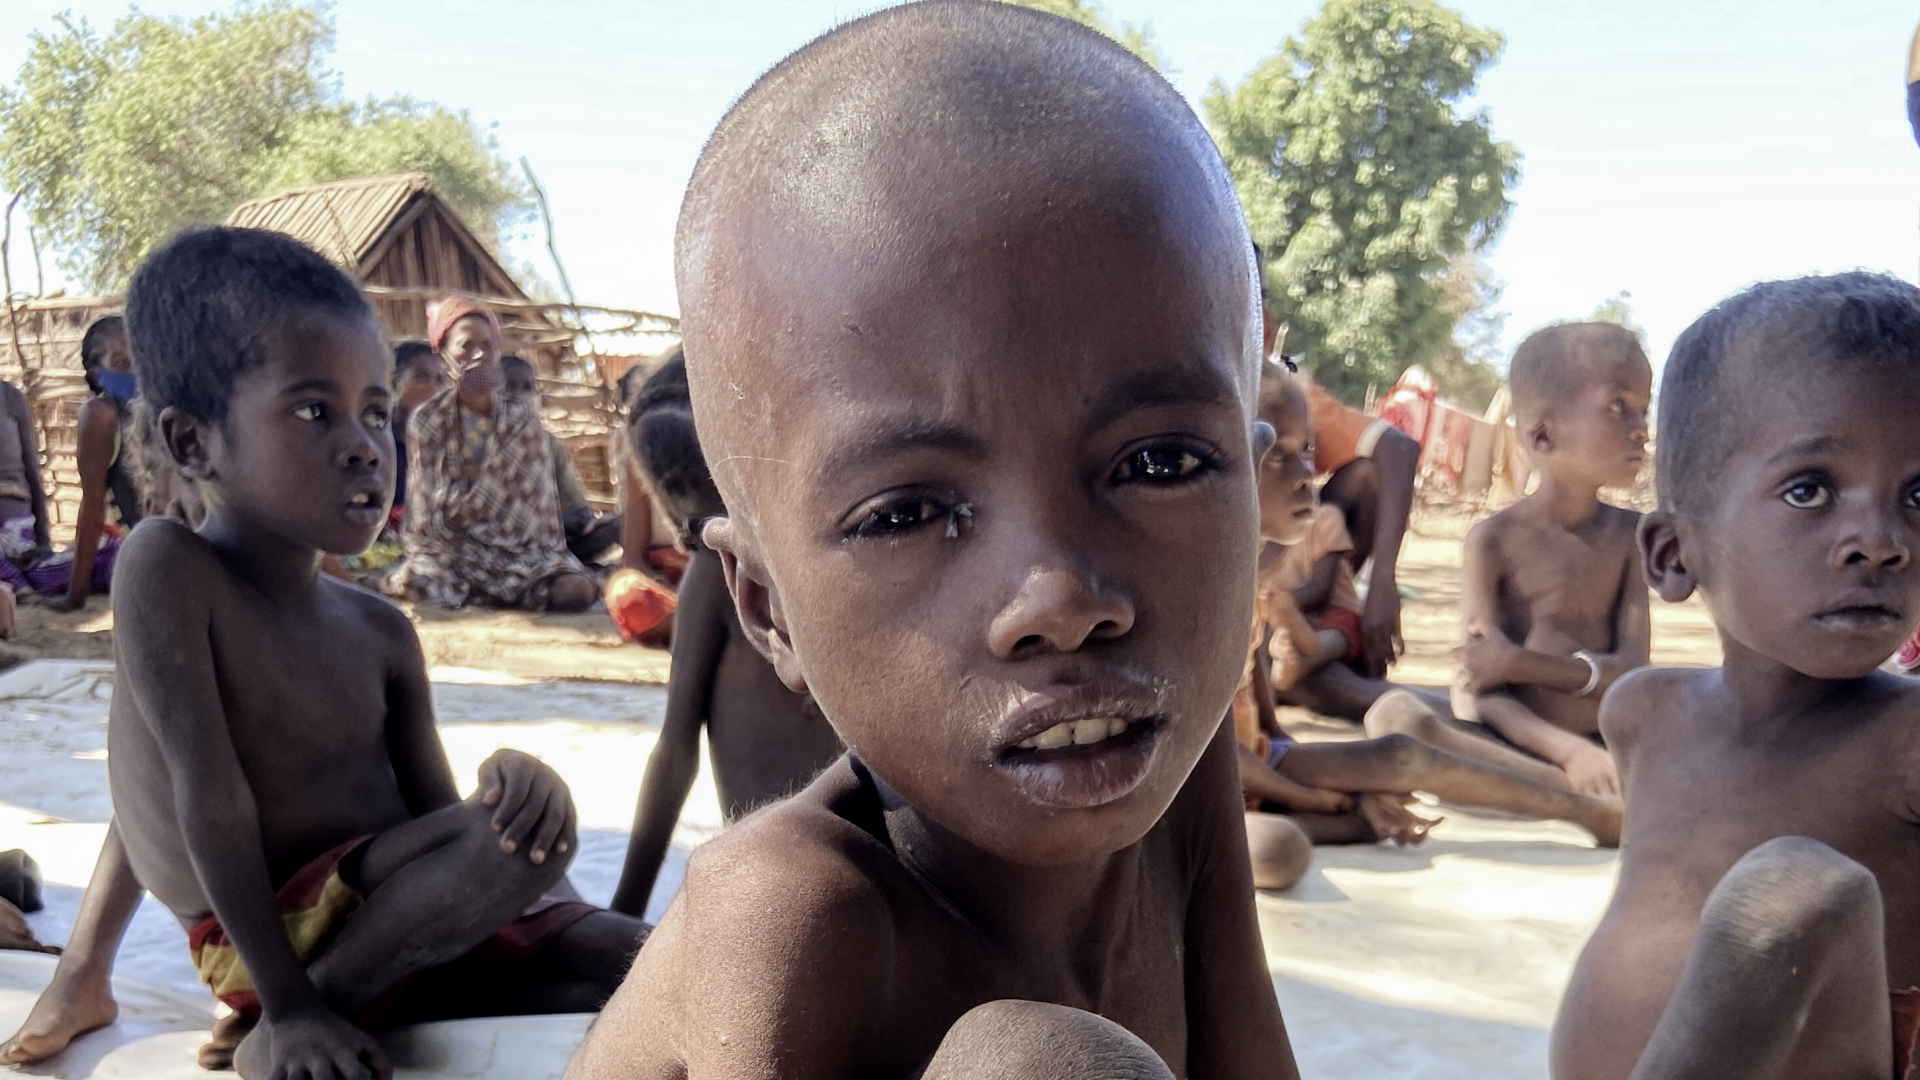 Hungernde Kinder im Süden Madagaskars | dpa